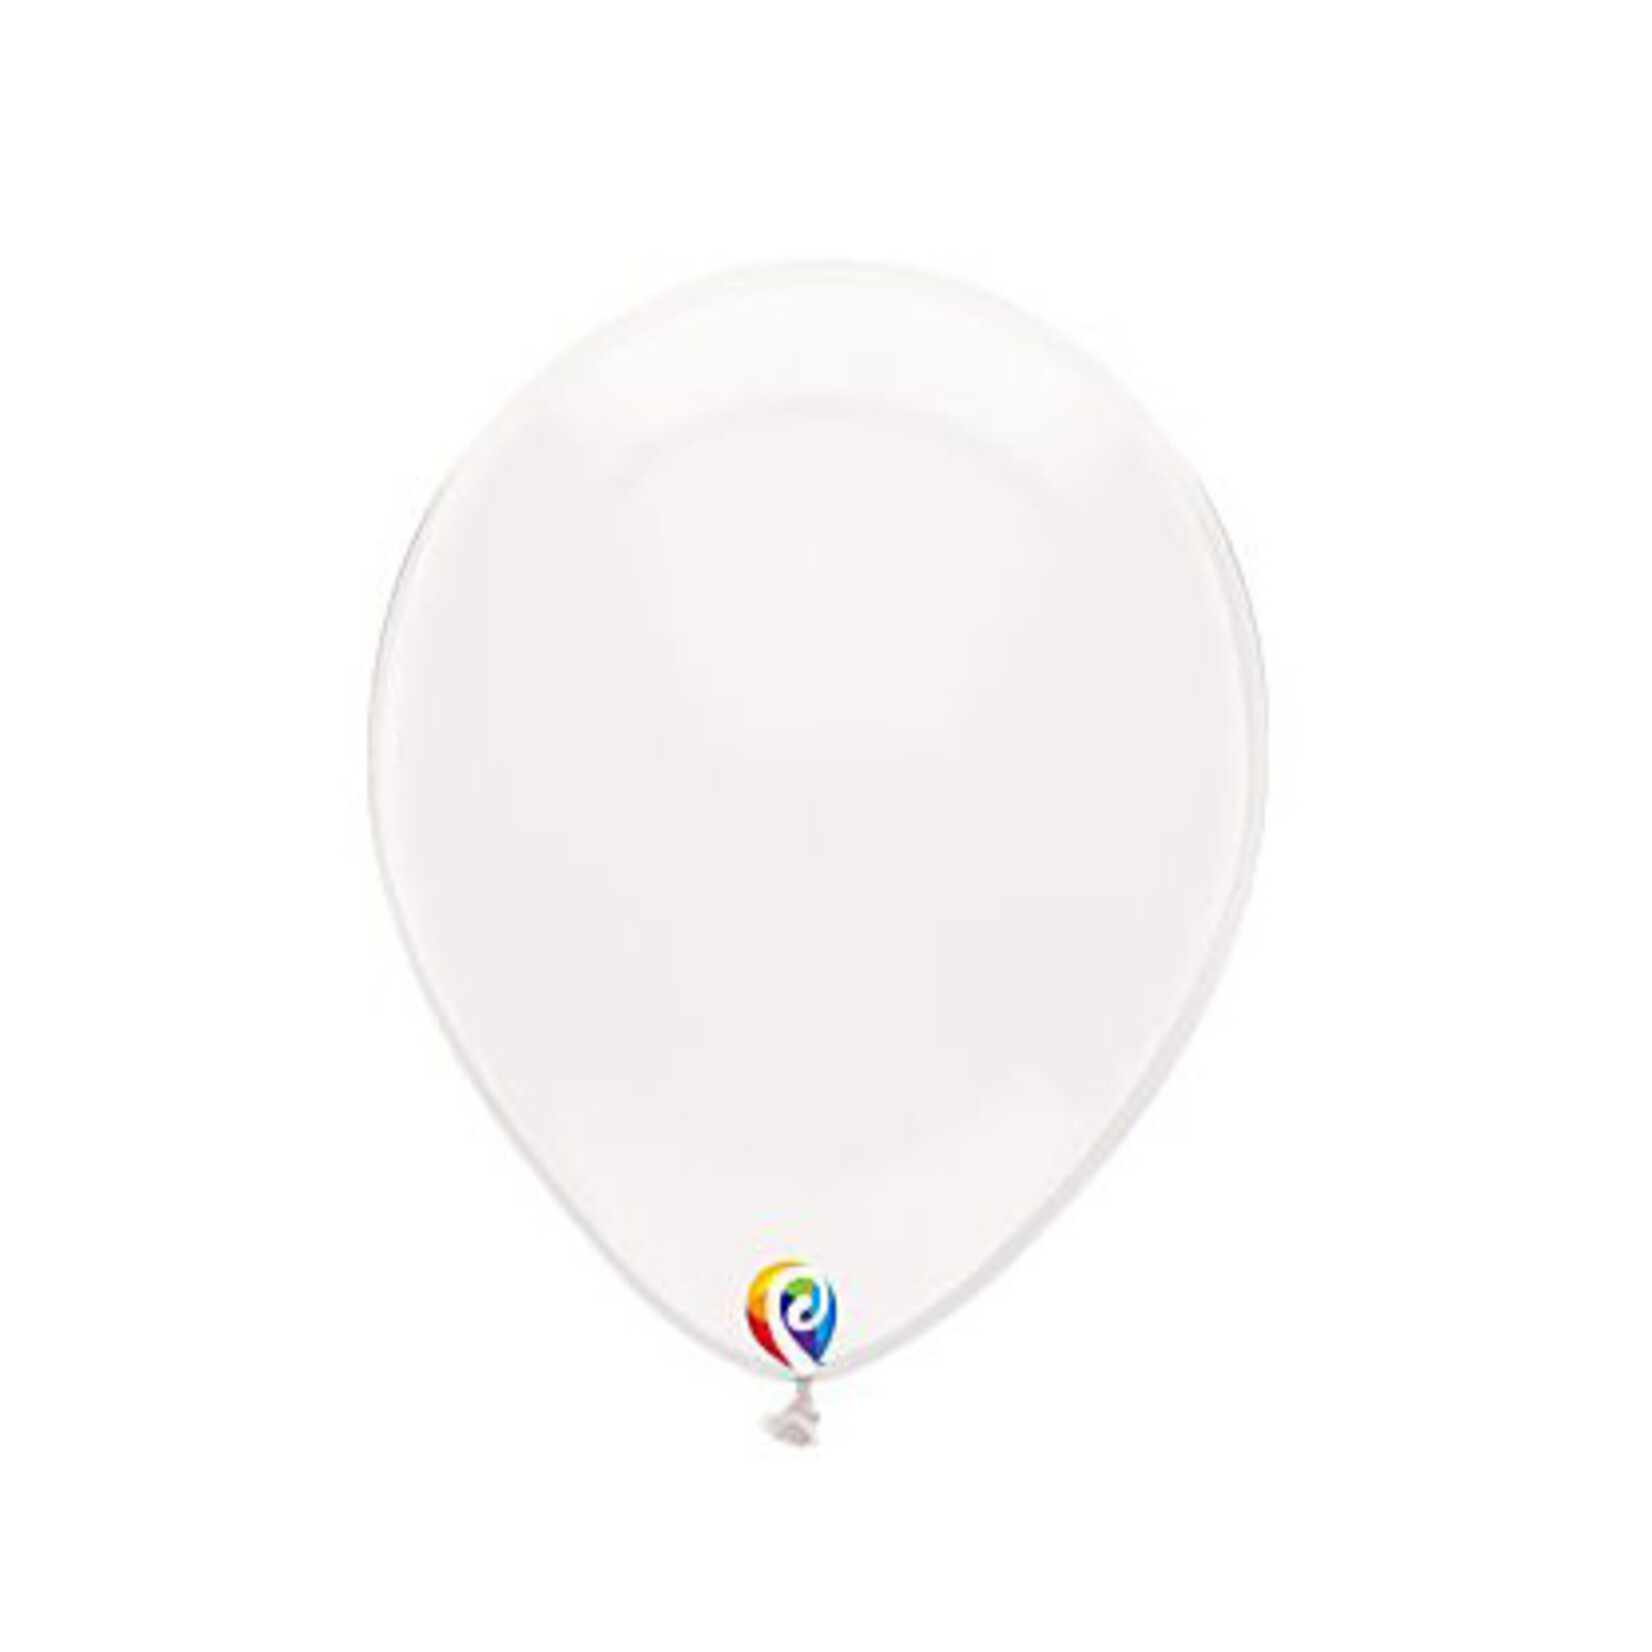 Funsational 12" White Funsational Latex Balloons - 50ct.